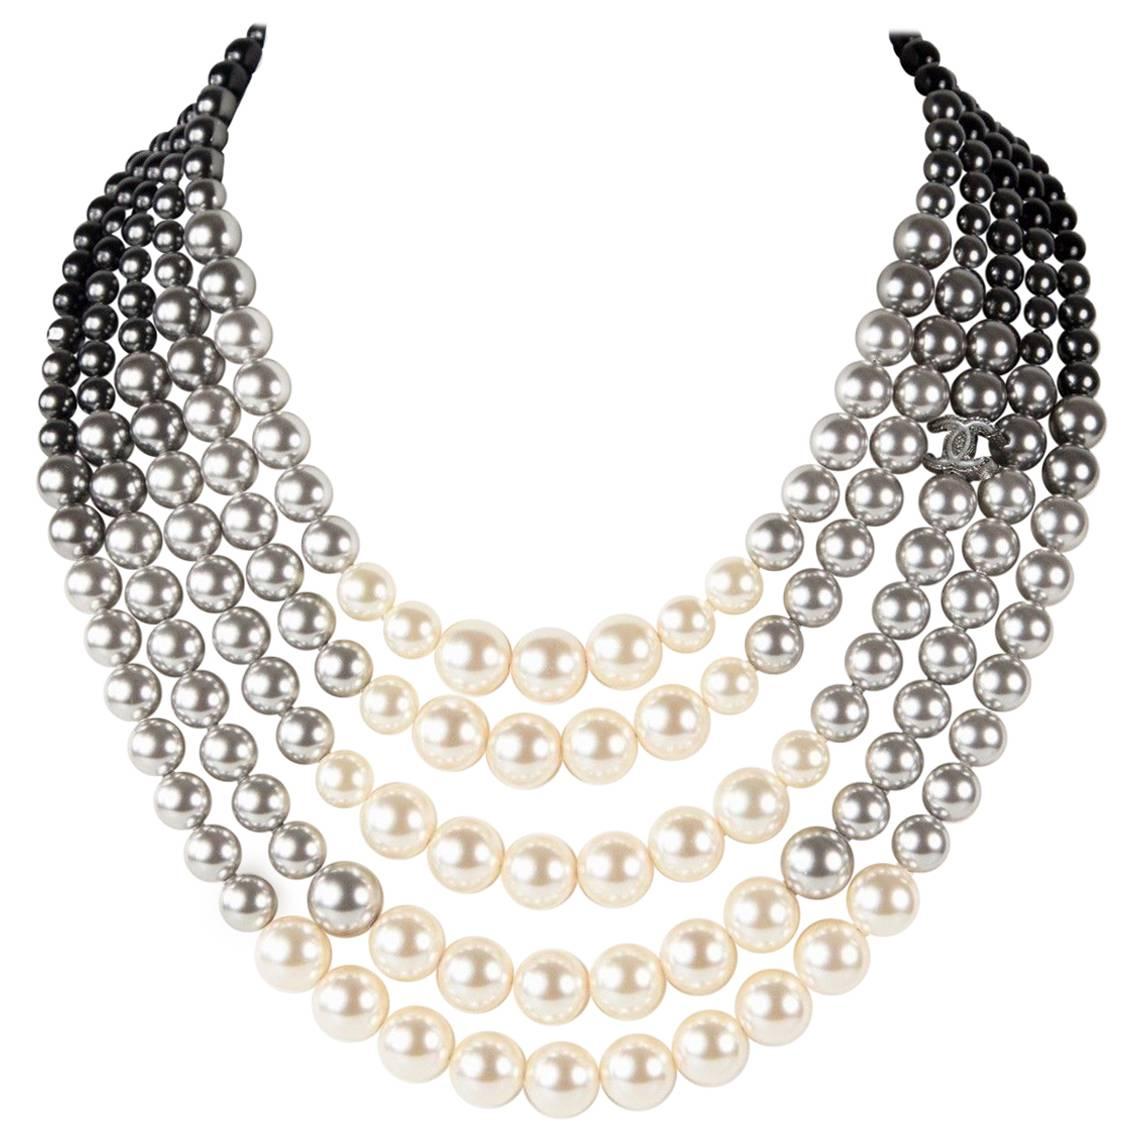 Chanel 2015 Pearl Ombre Necklace - New Gradient Gray White Bead Multistrand CC